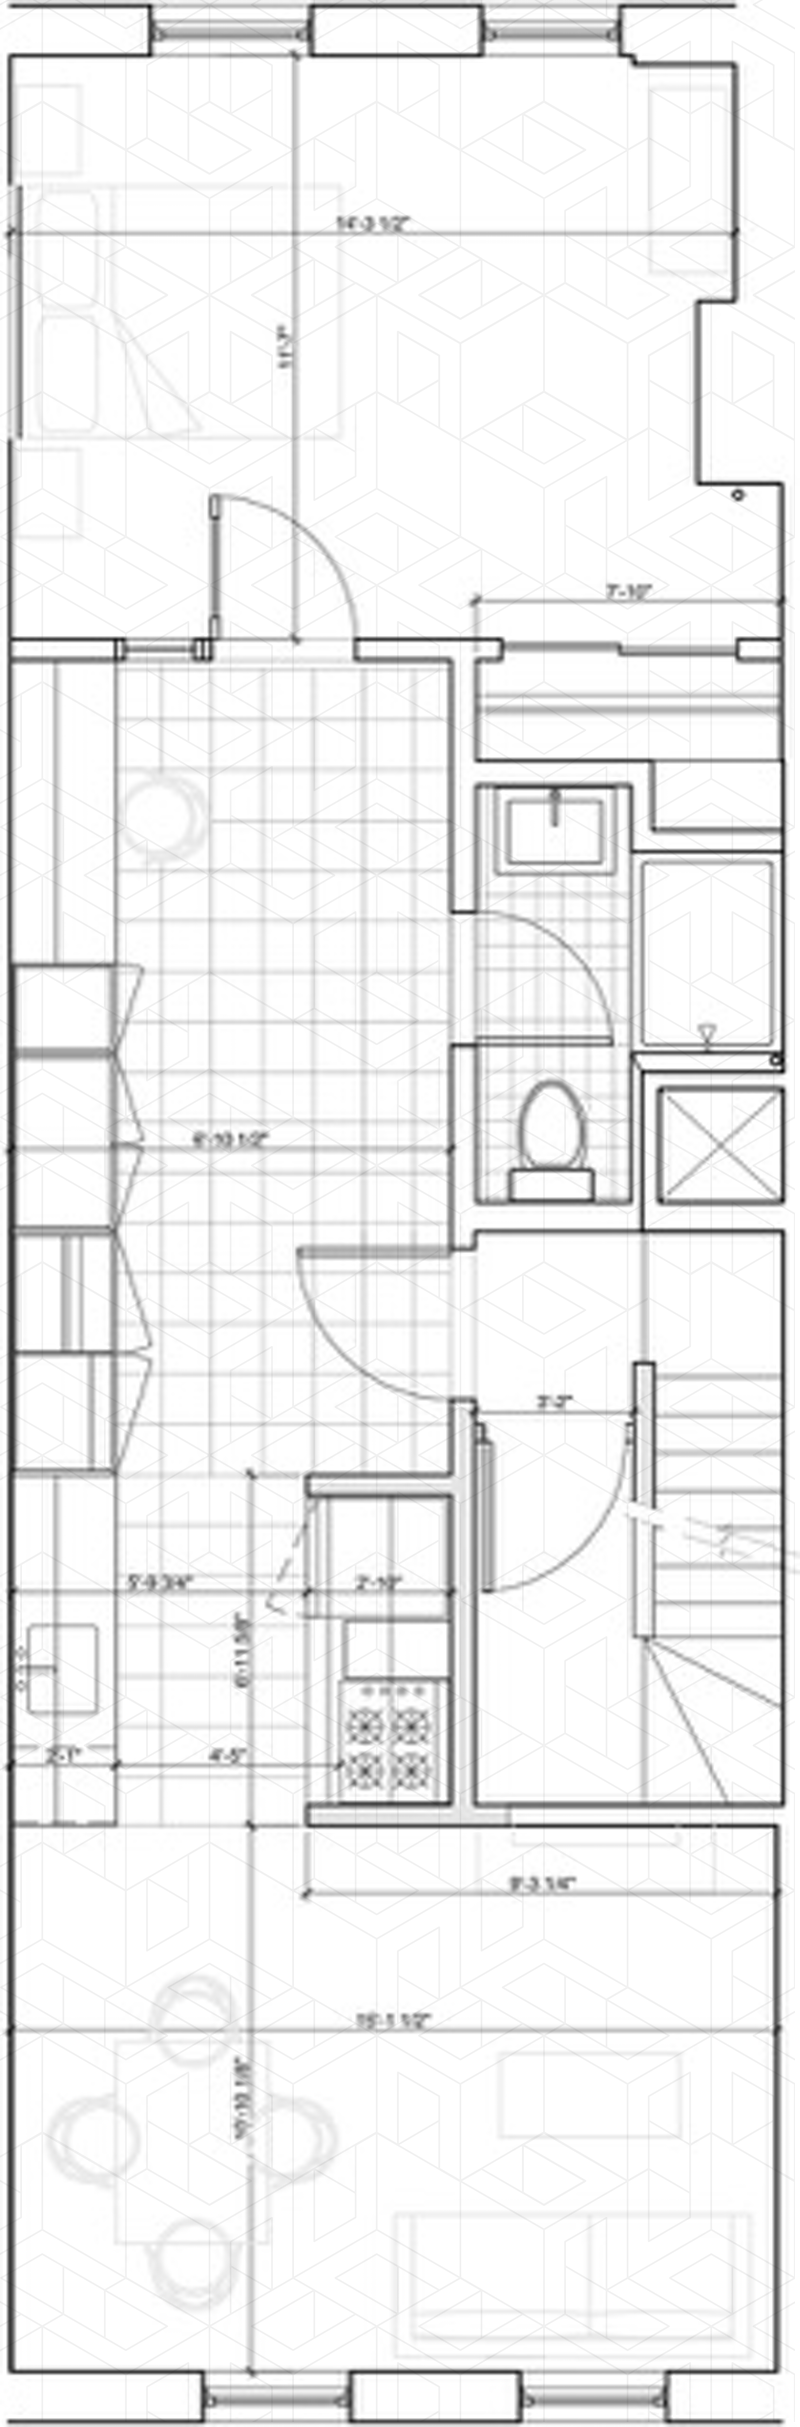 Floorplan for 623 Grand Avenue, 2